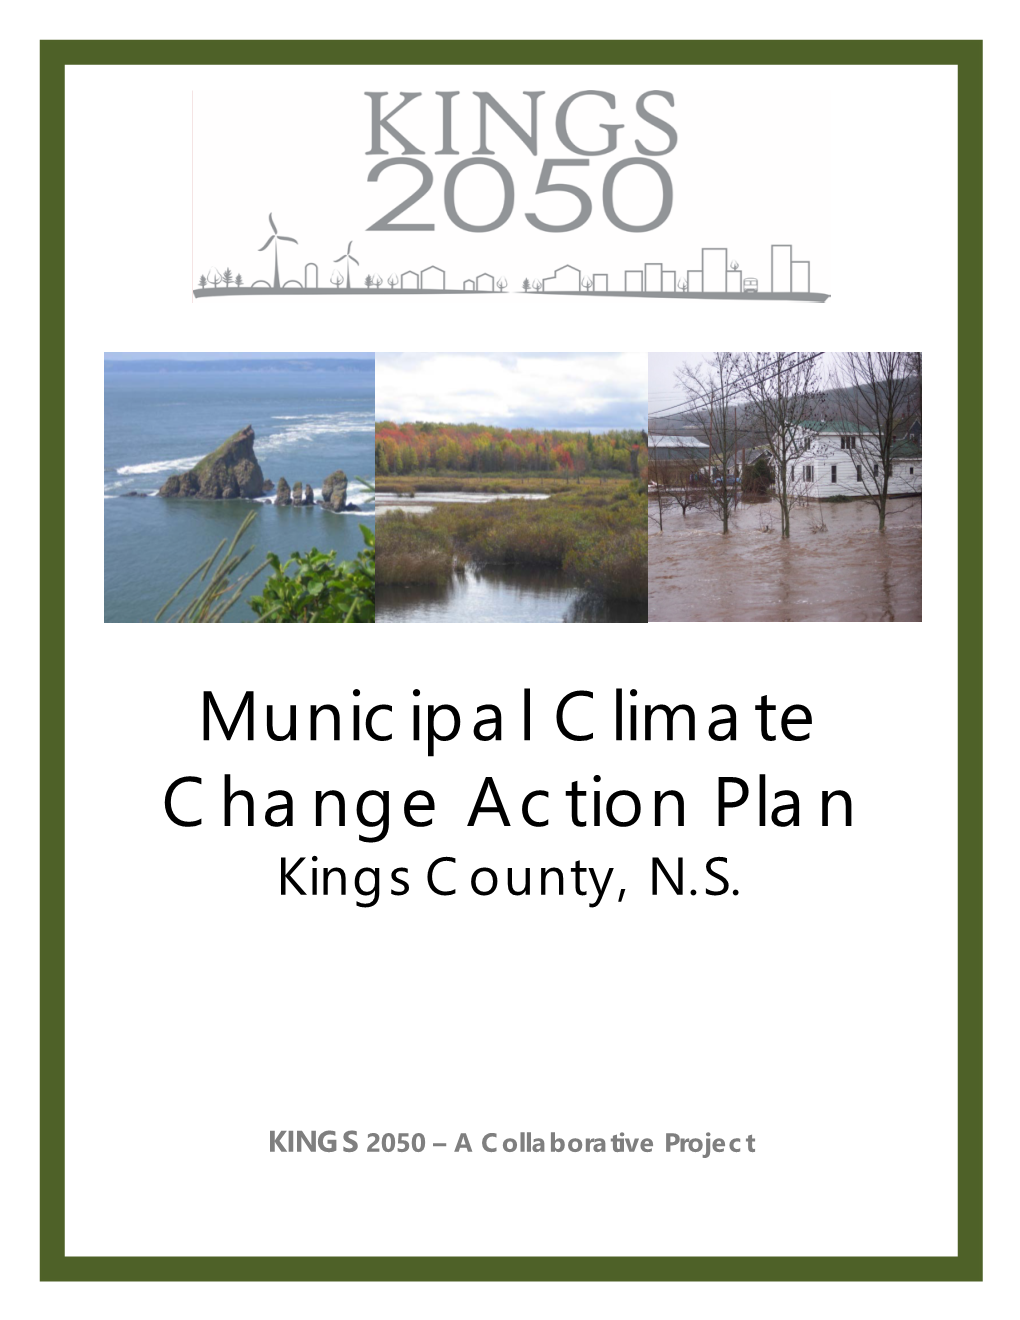 Kings 2050 Municipal Climate Change Action Plan